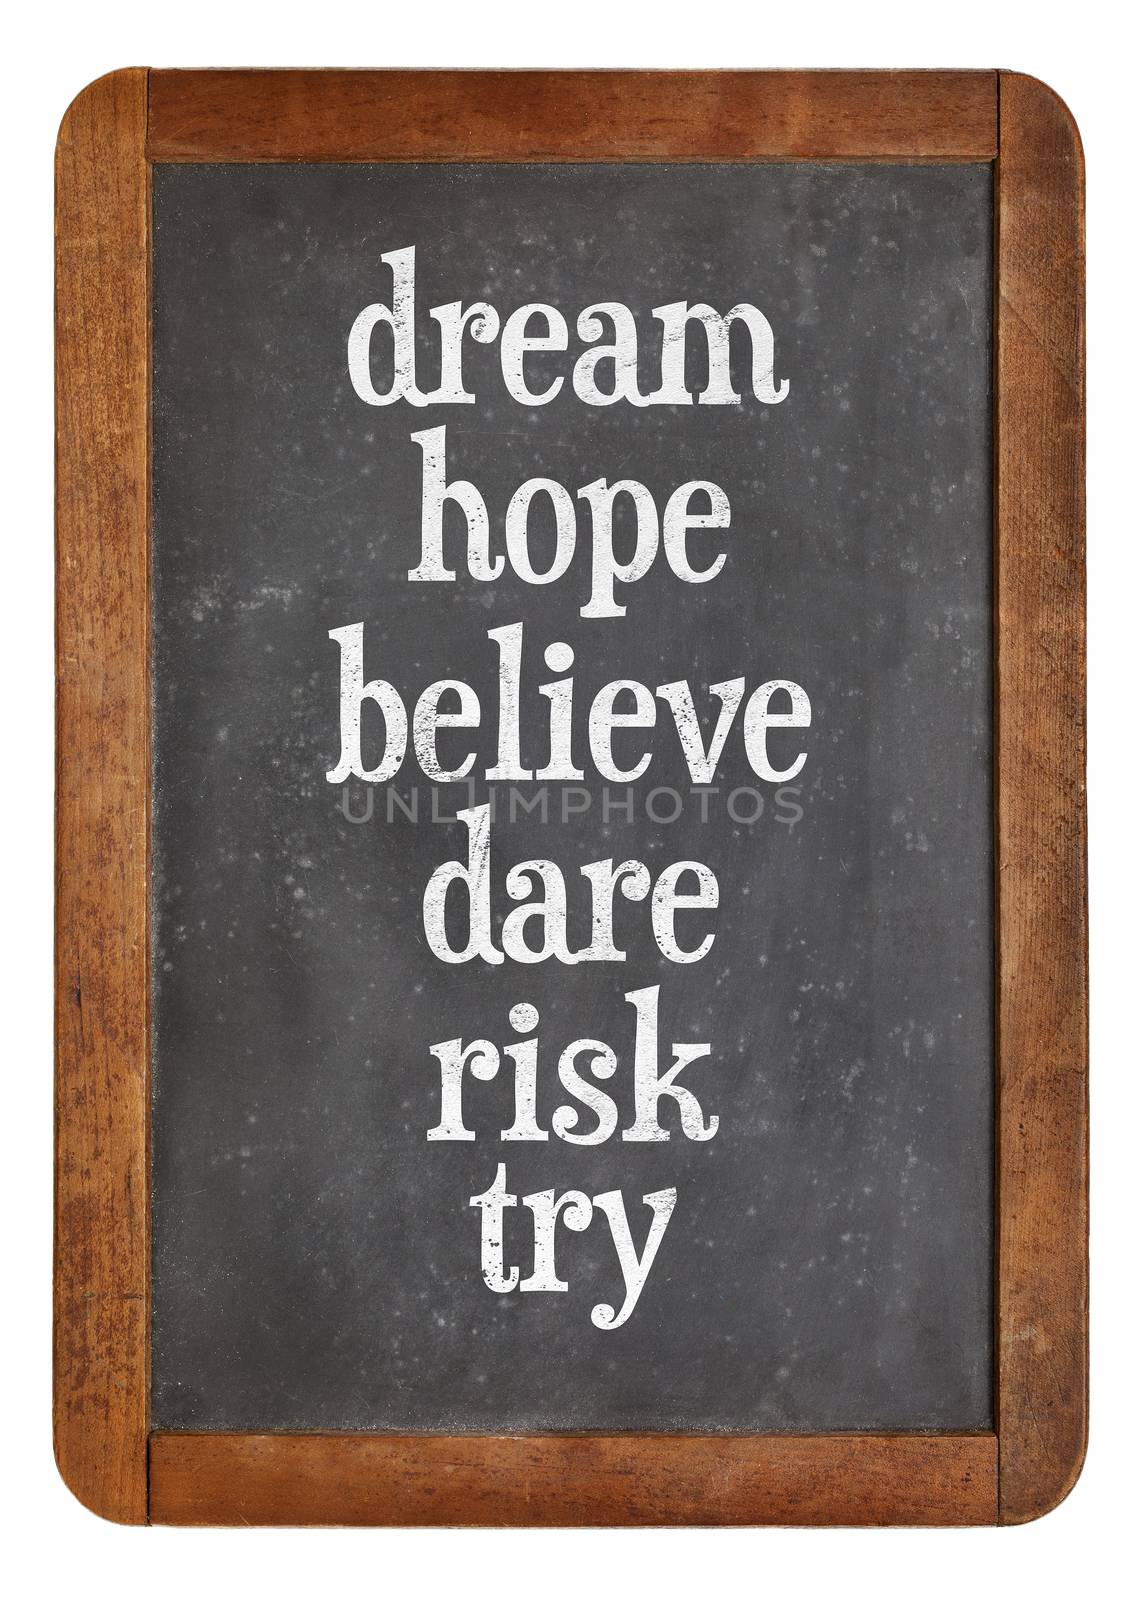 dream, hope, believe, dare, risk try - a set of motivational words n on a vintage slate blackboard